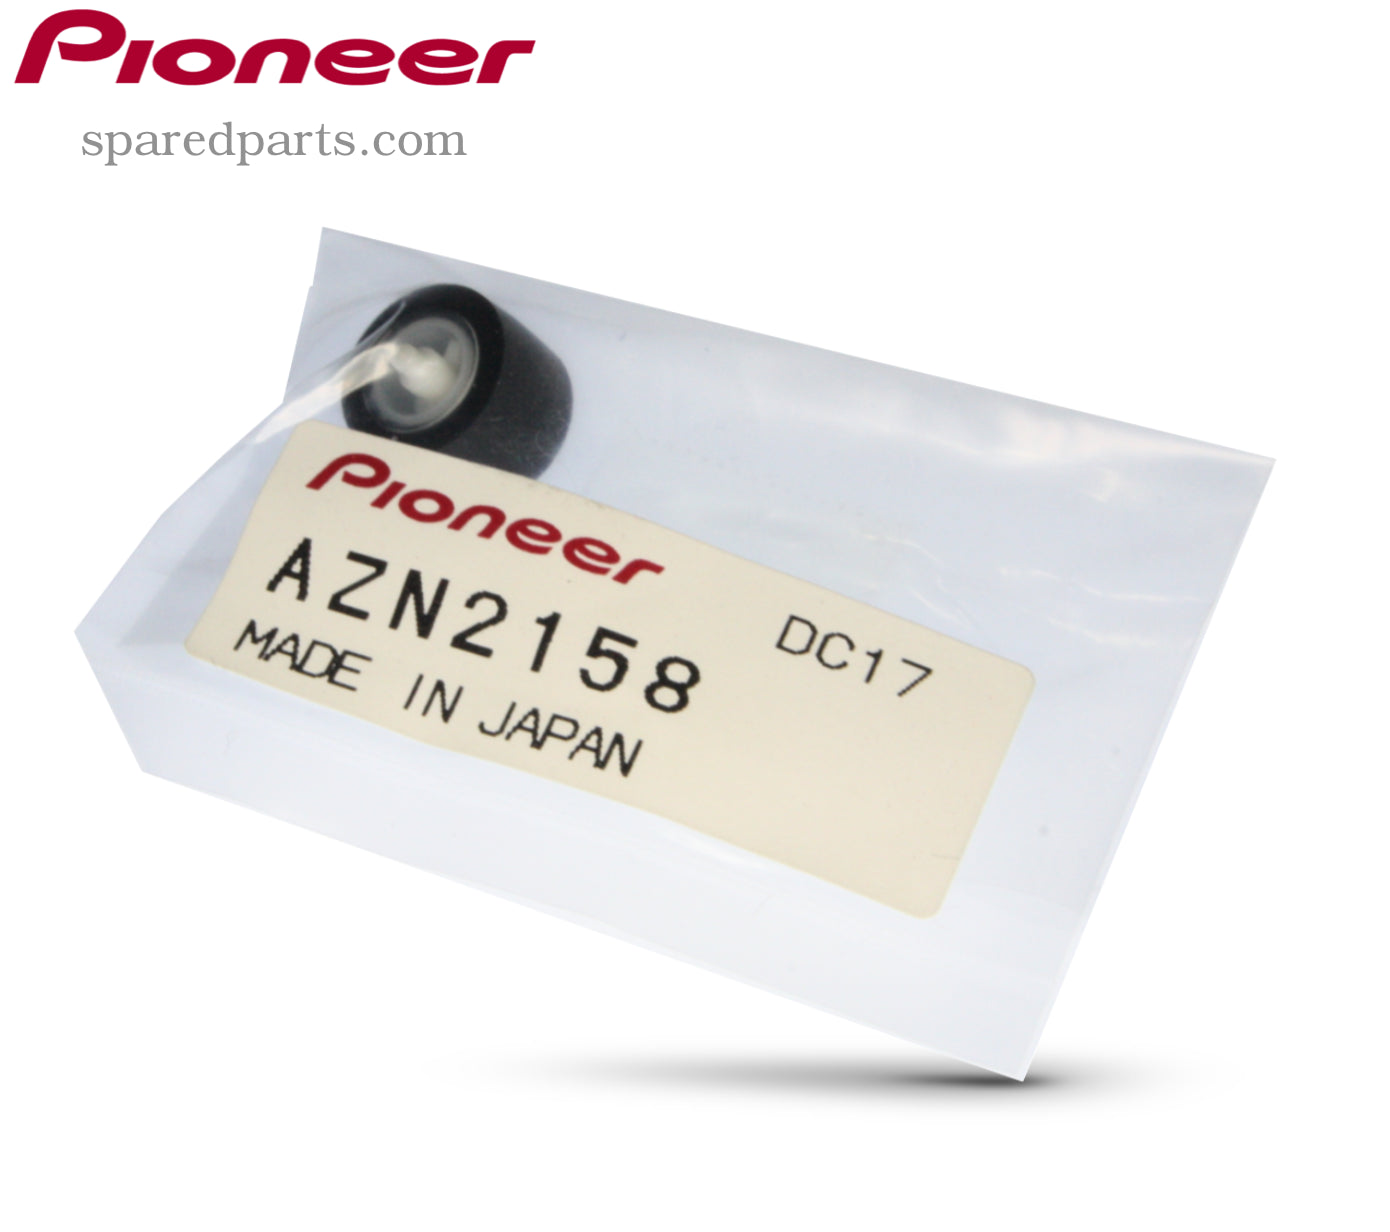 Pioneer AZN2158 Pinch Roller